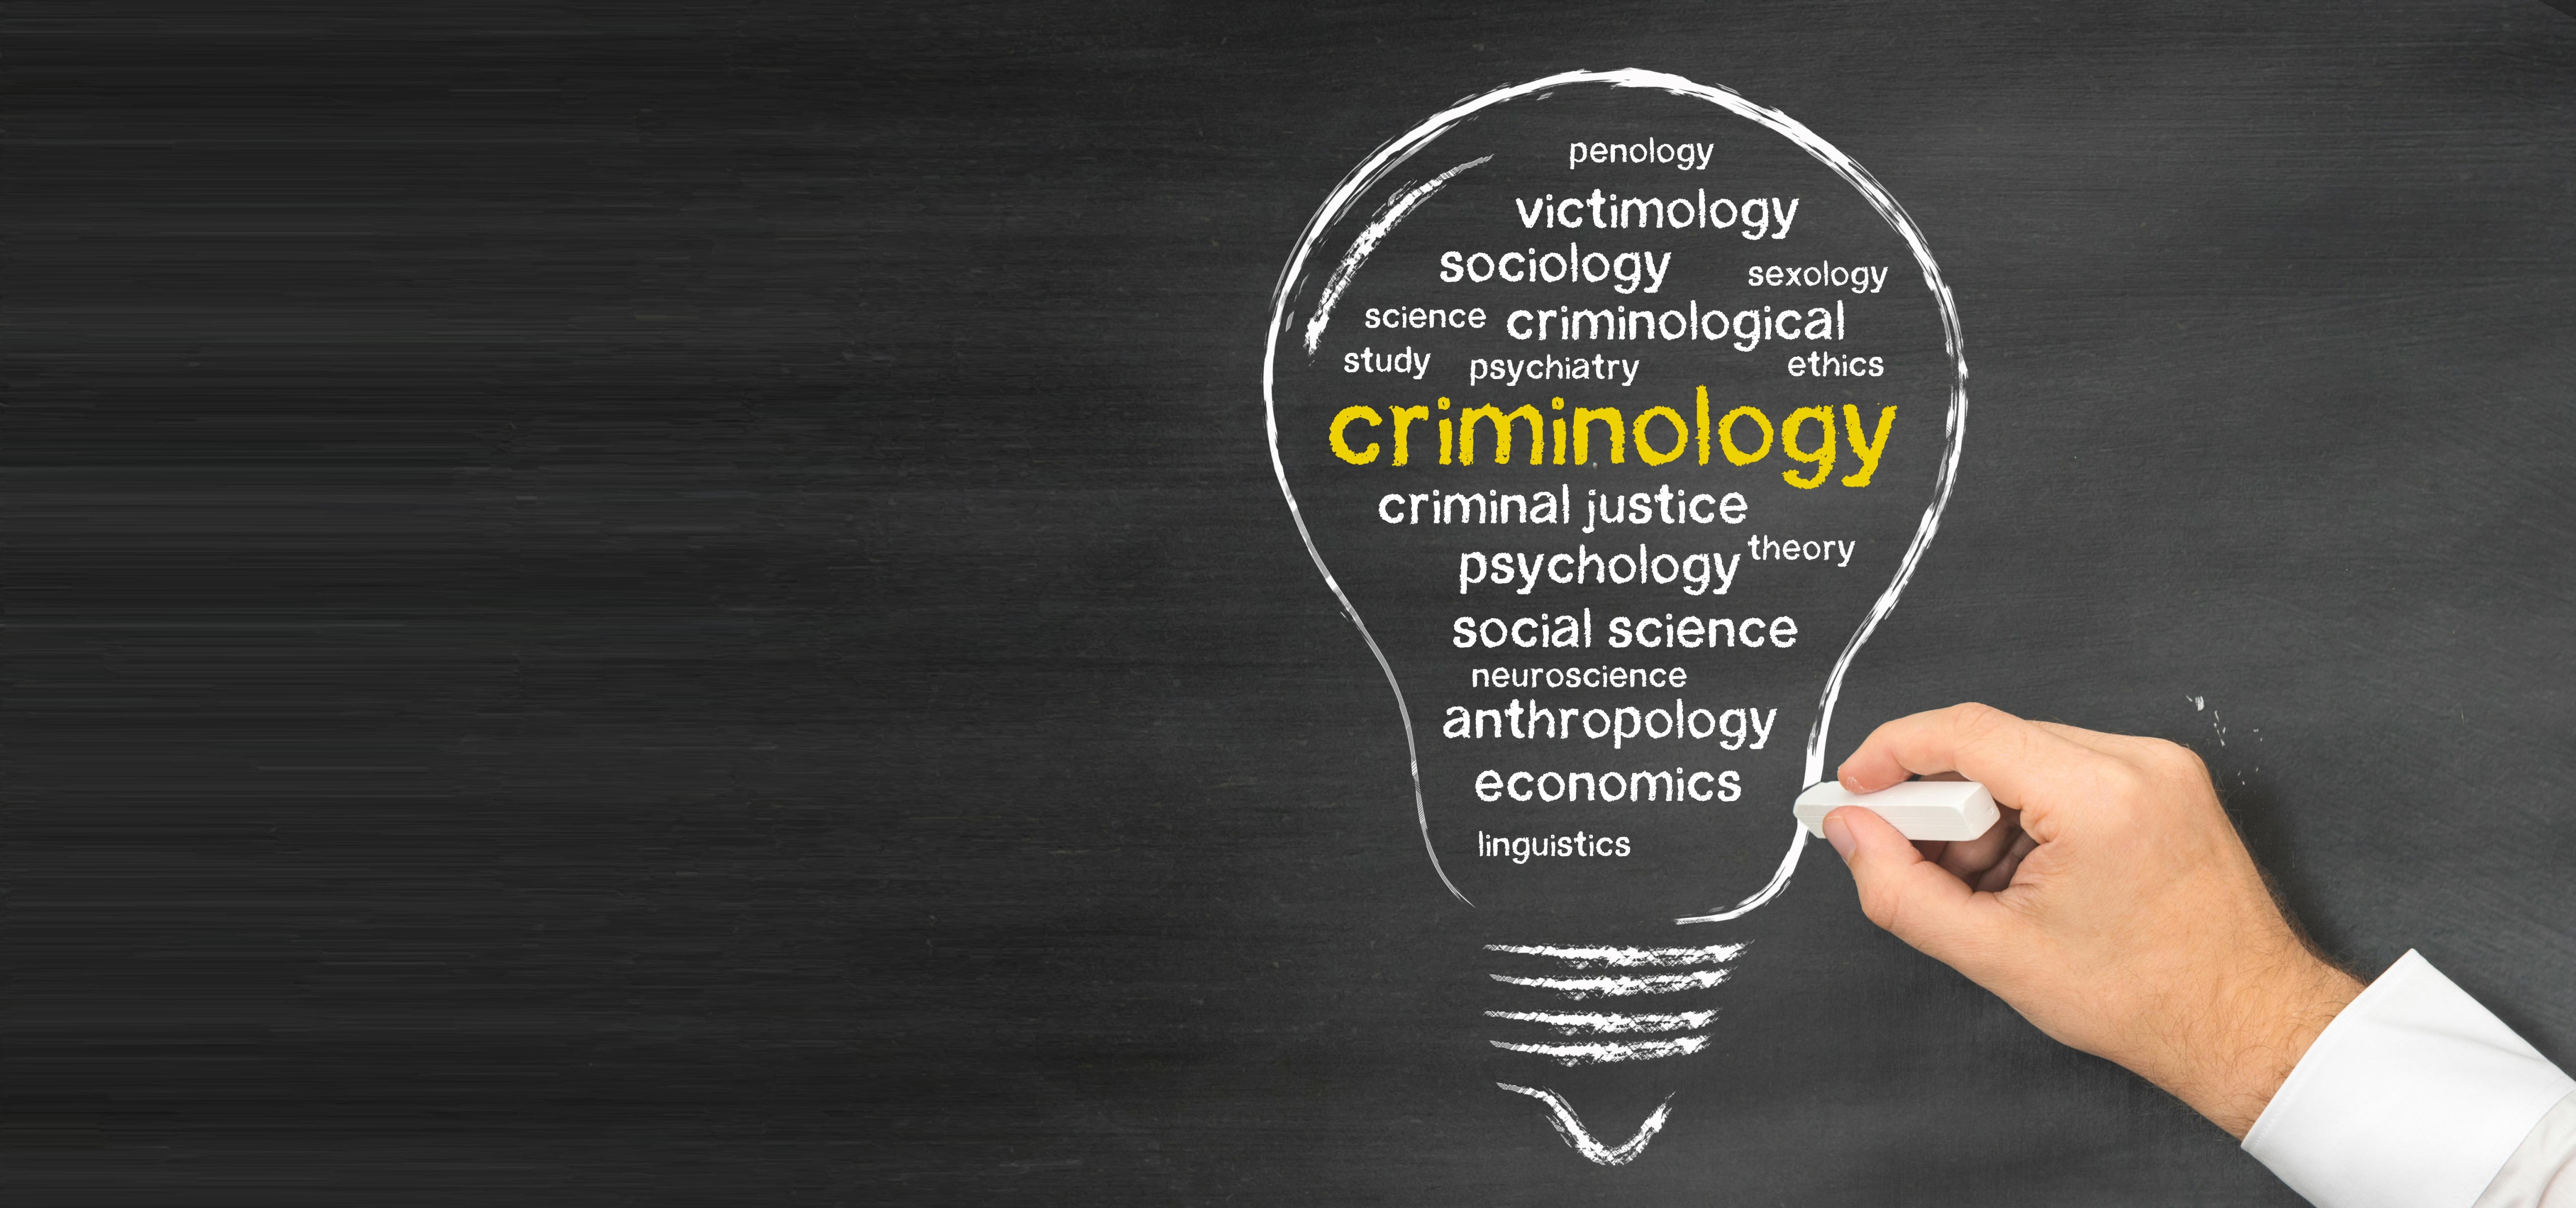 Criminology word cloud drawn inside a light bulb on a chalkboard